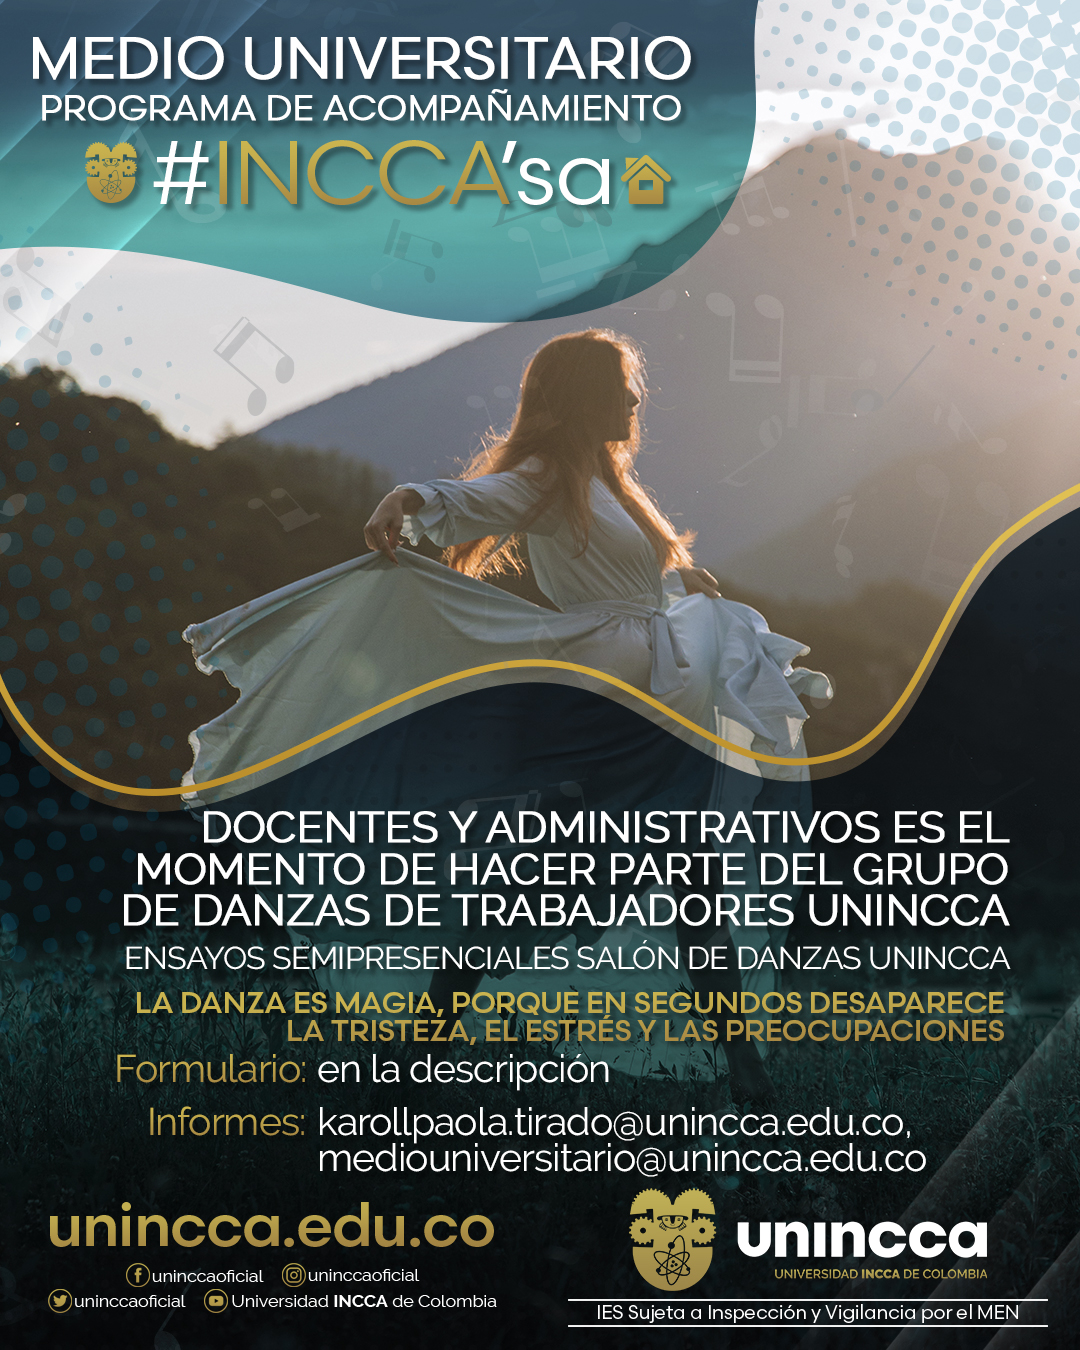 Universidad INCCA on Twitter: 